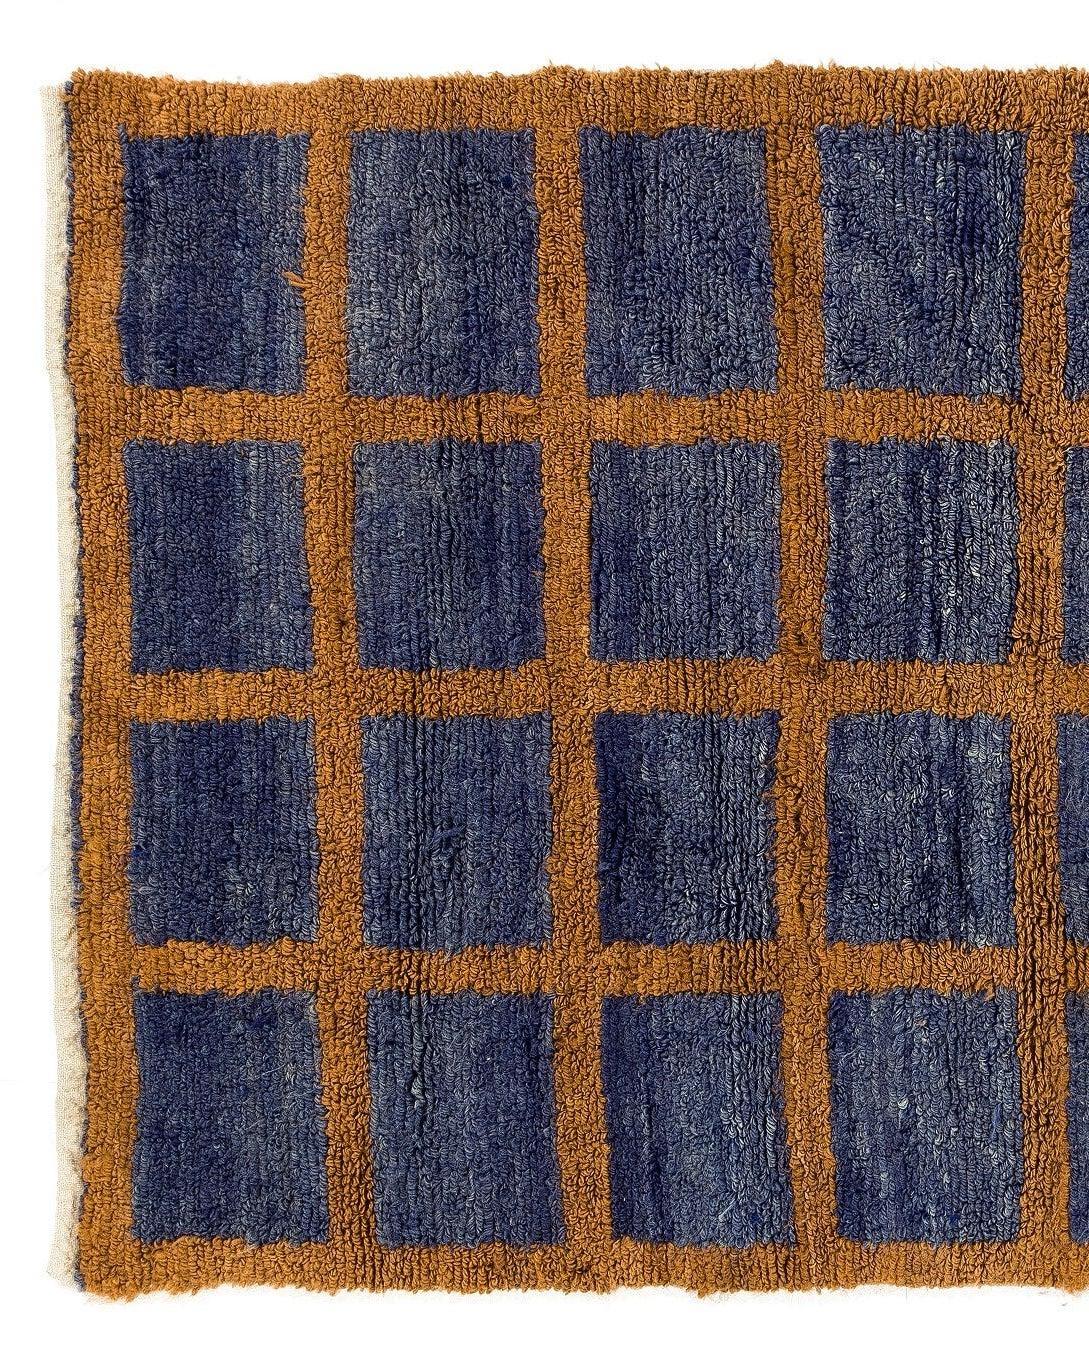 blue and orange rug